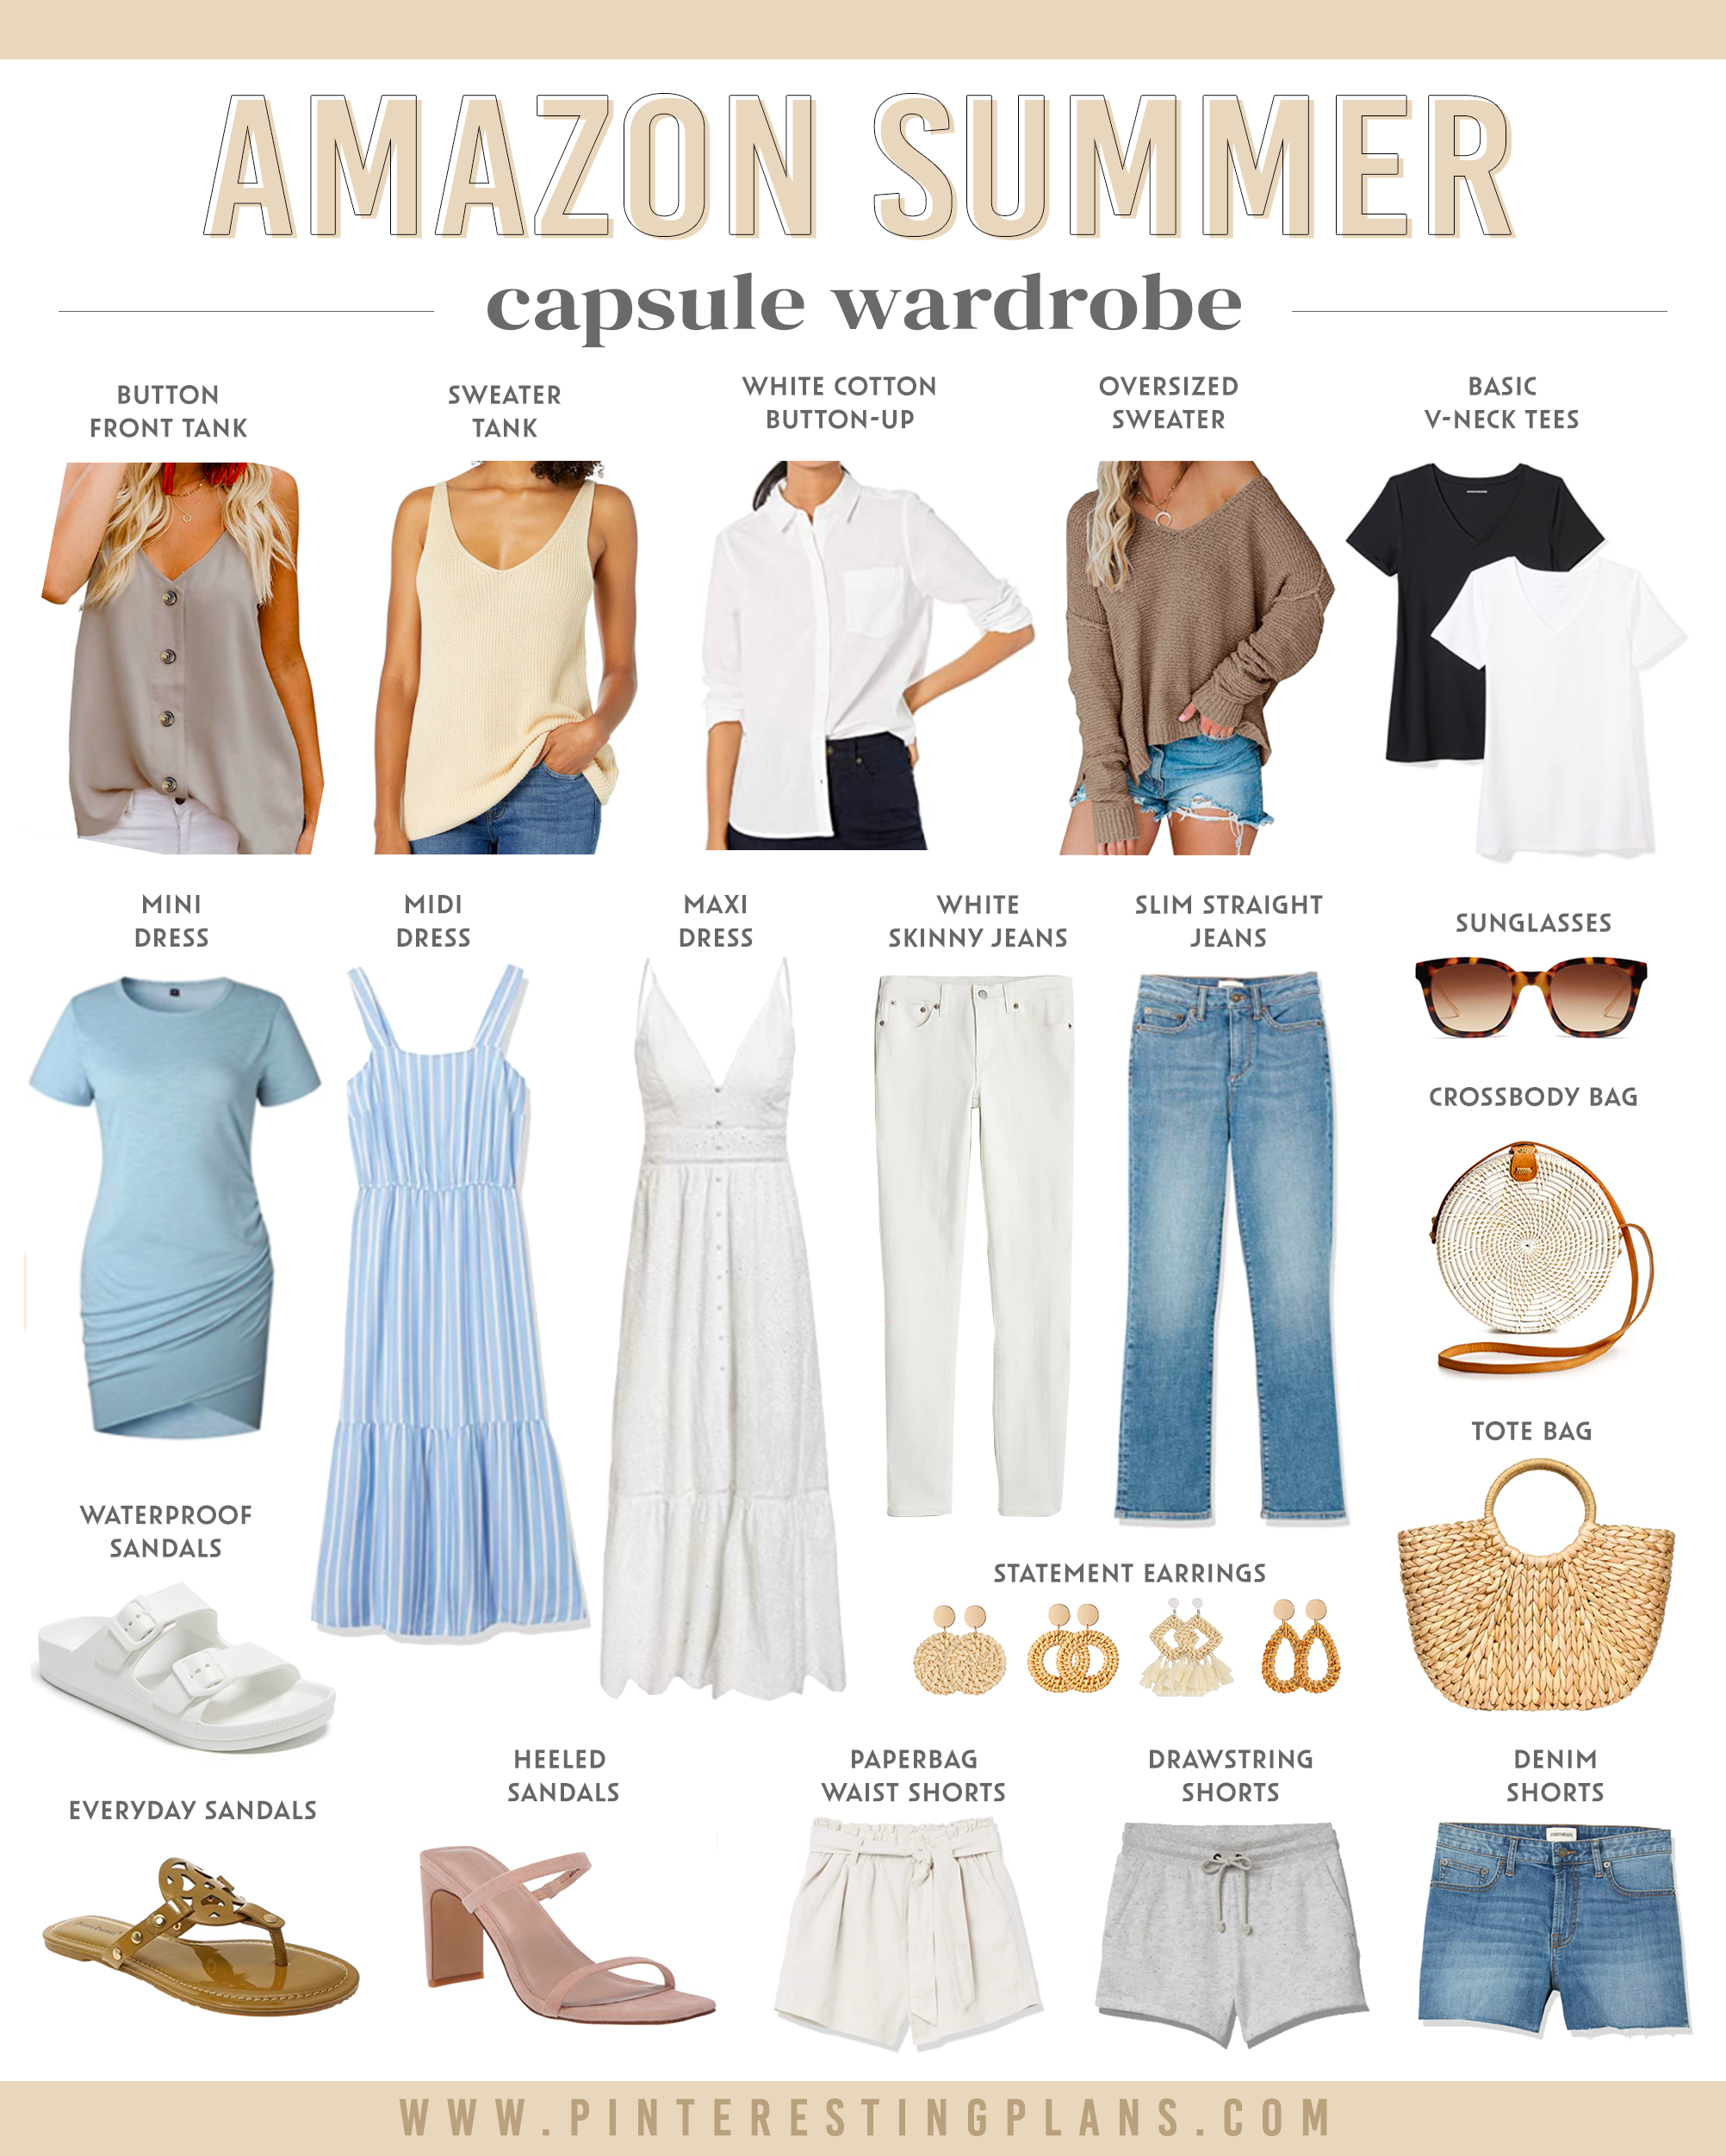 pinteresting-plans--summer-capsule-wardrobe-2021